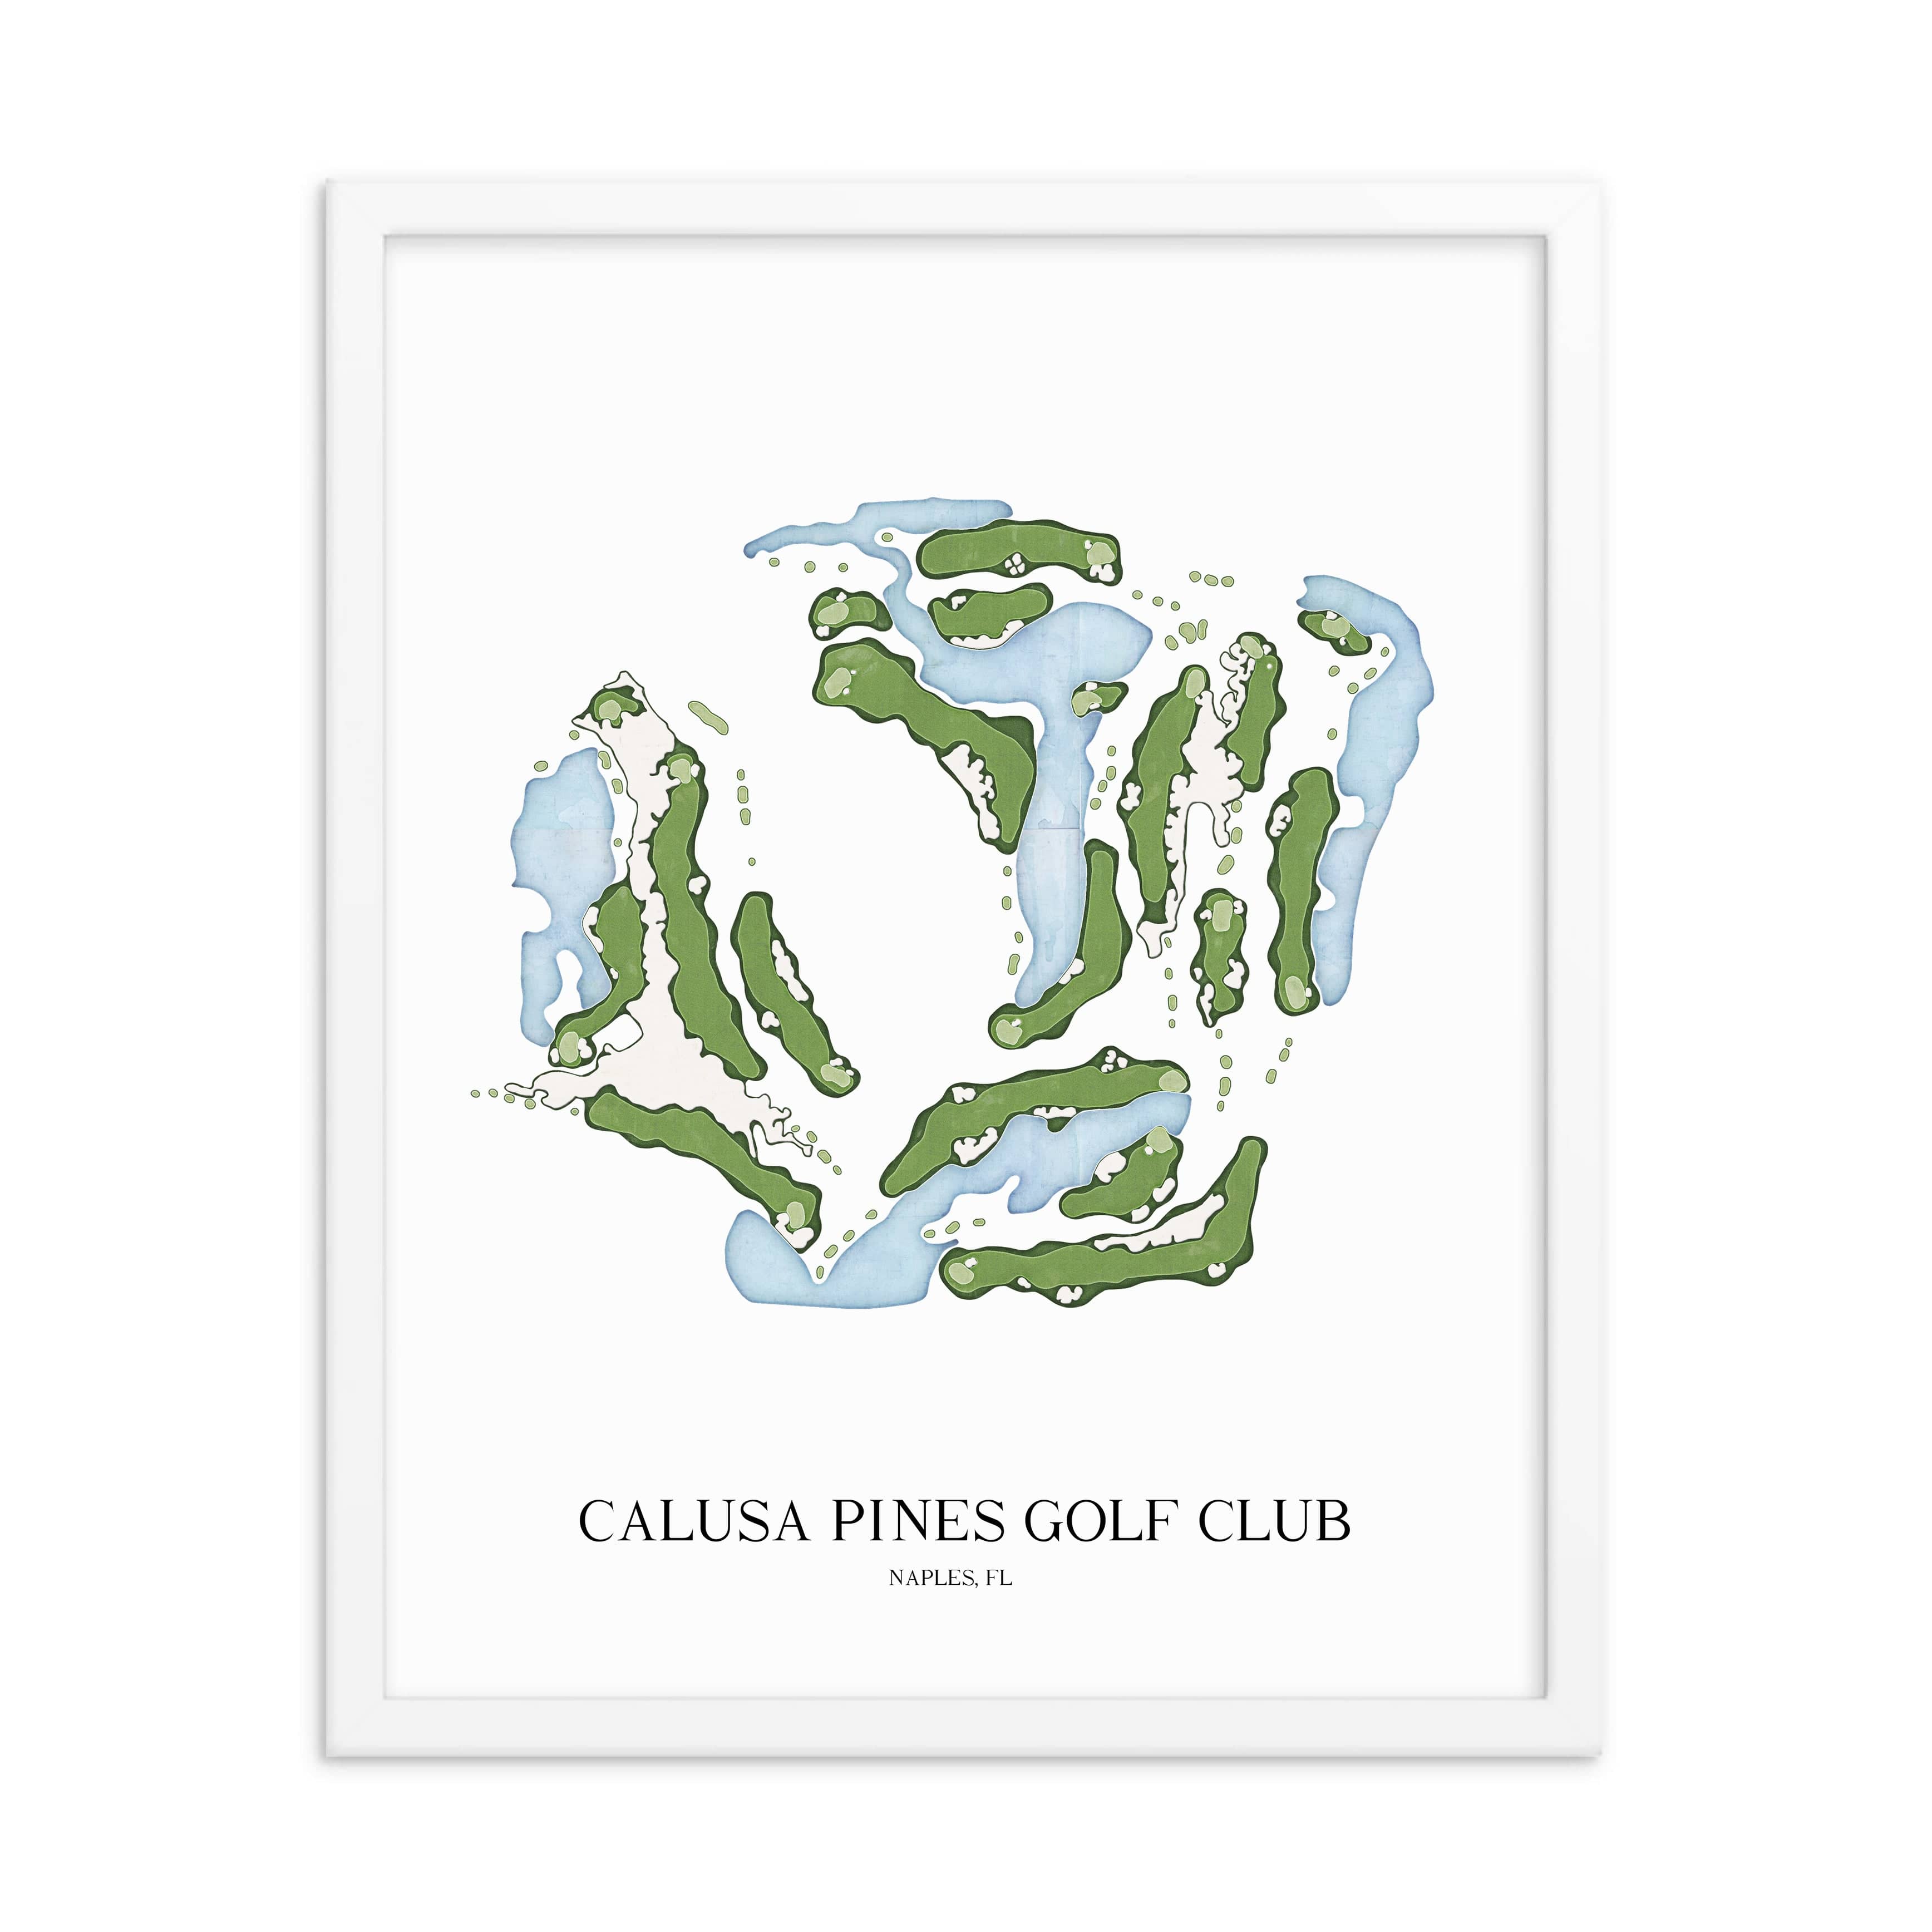 The 19th Hole Golf Shop - Golf Course Prints -  Calusa Pines Golf Club Golf Course Map